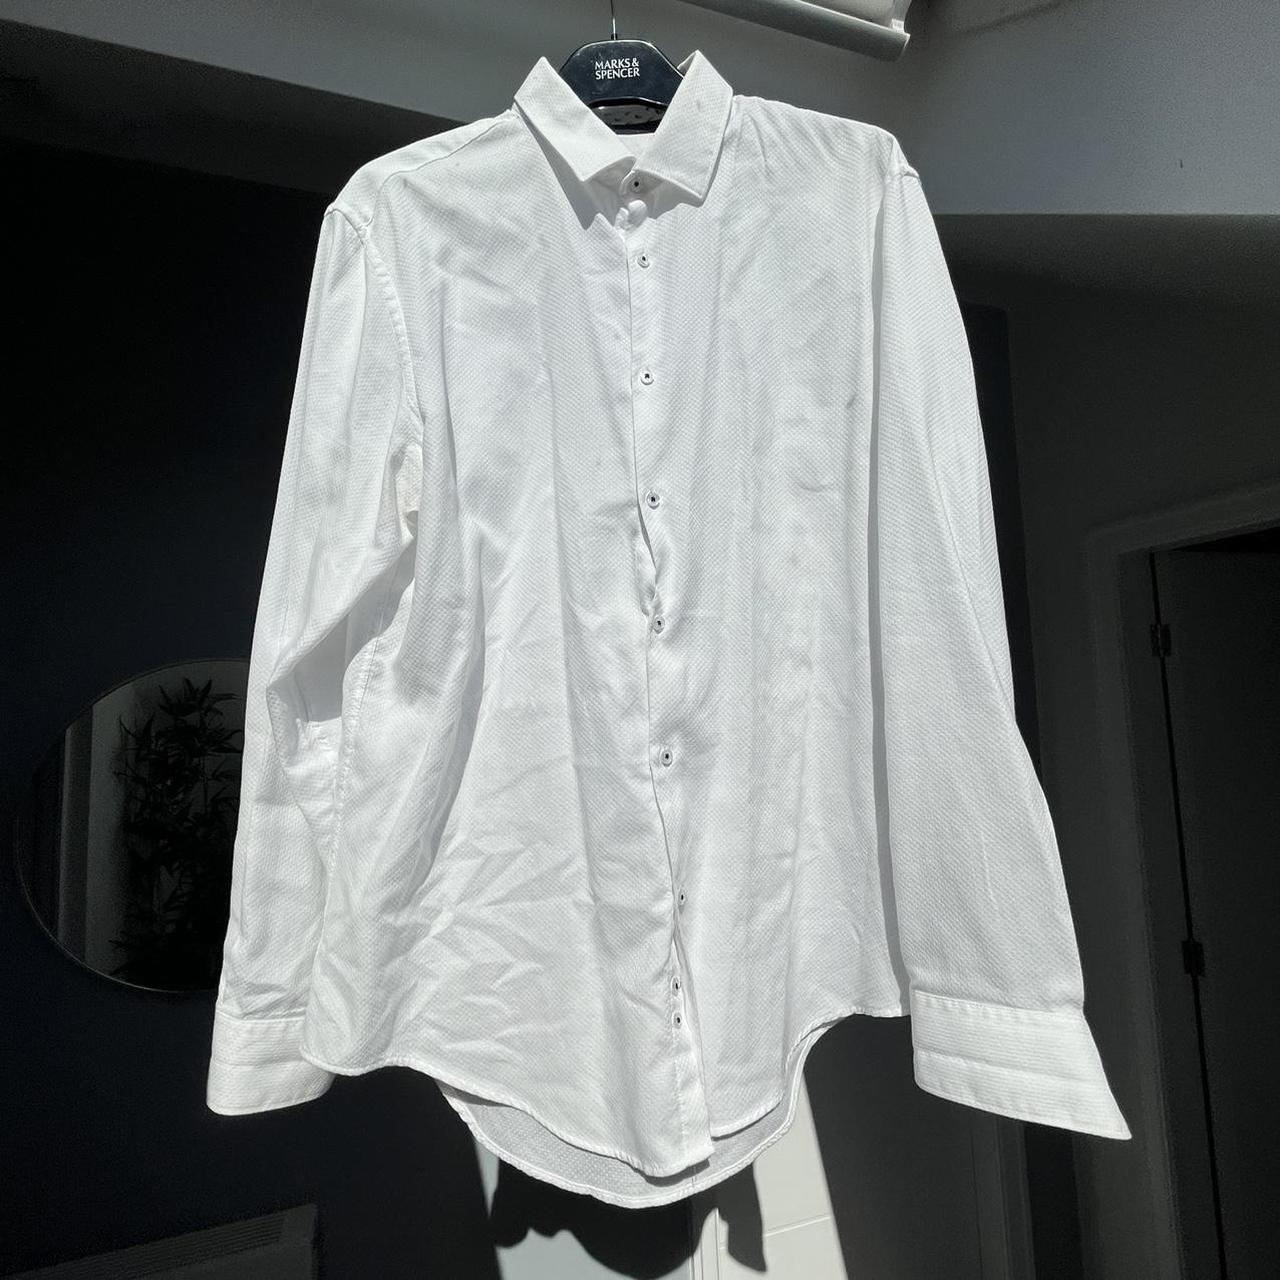 Zara Men's White and Black Shirt | Depop